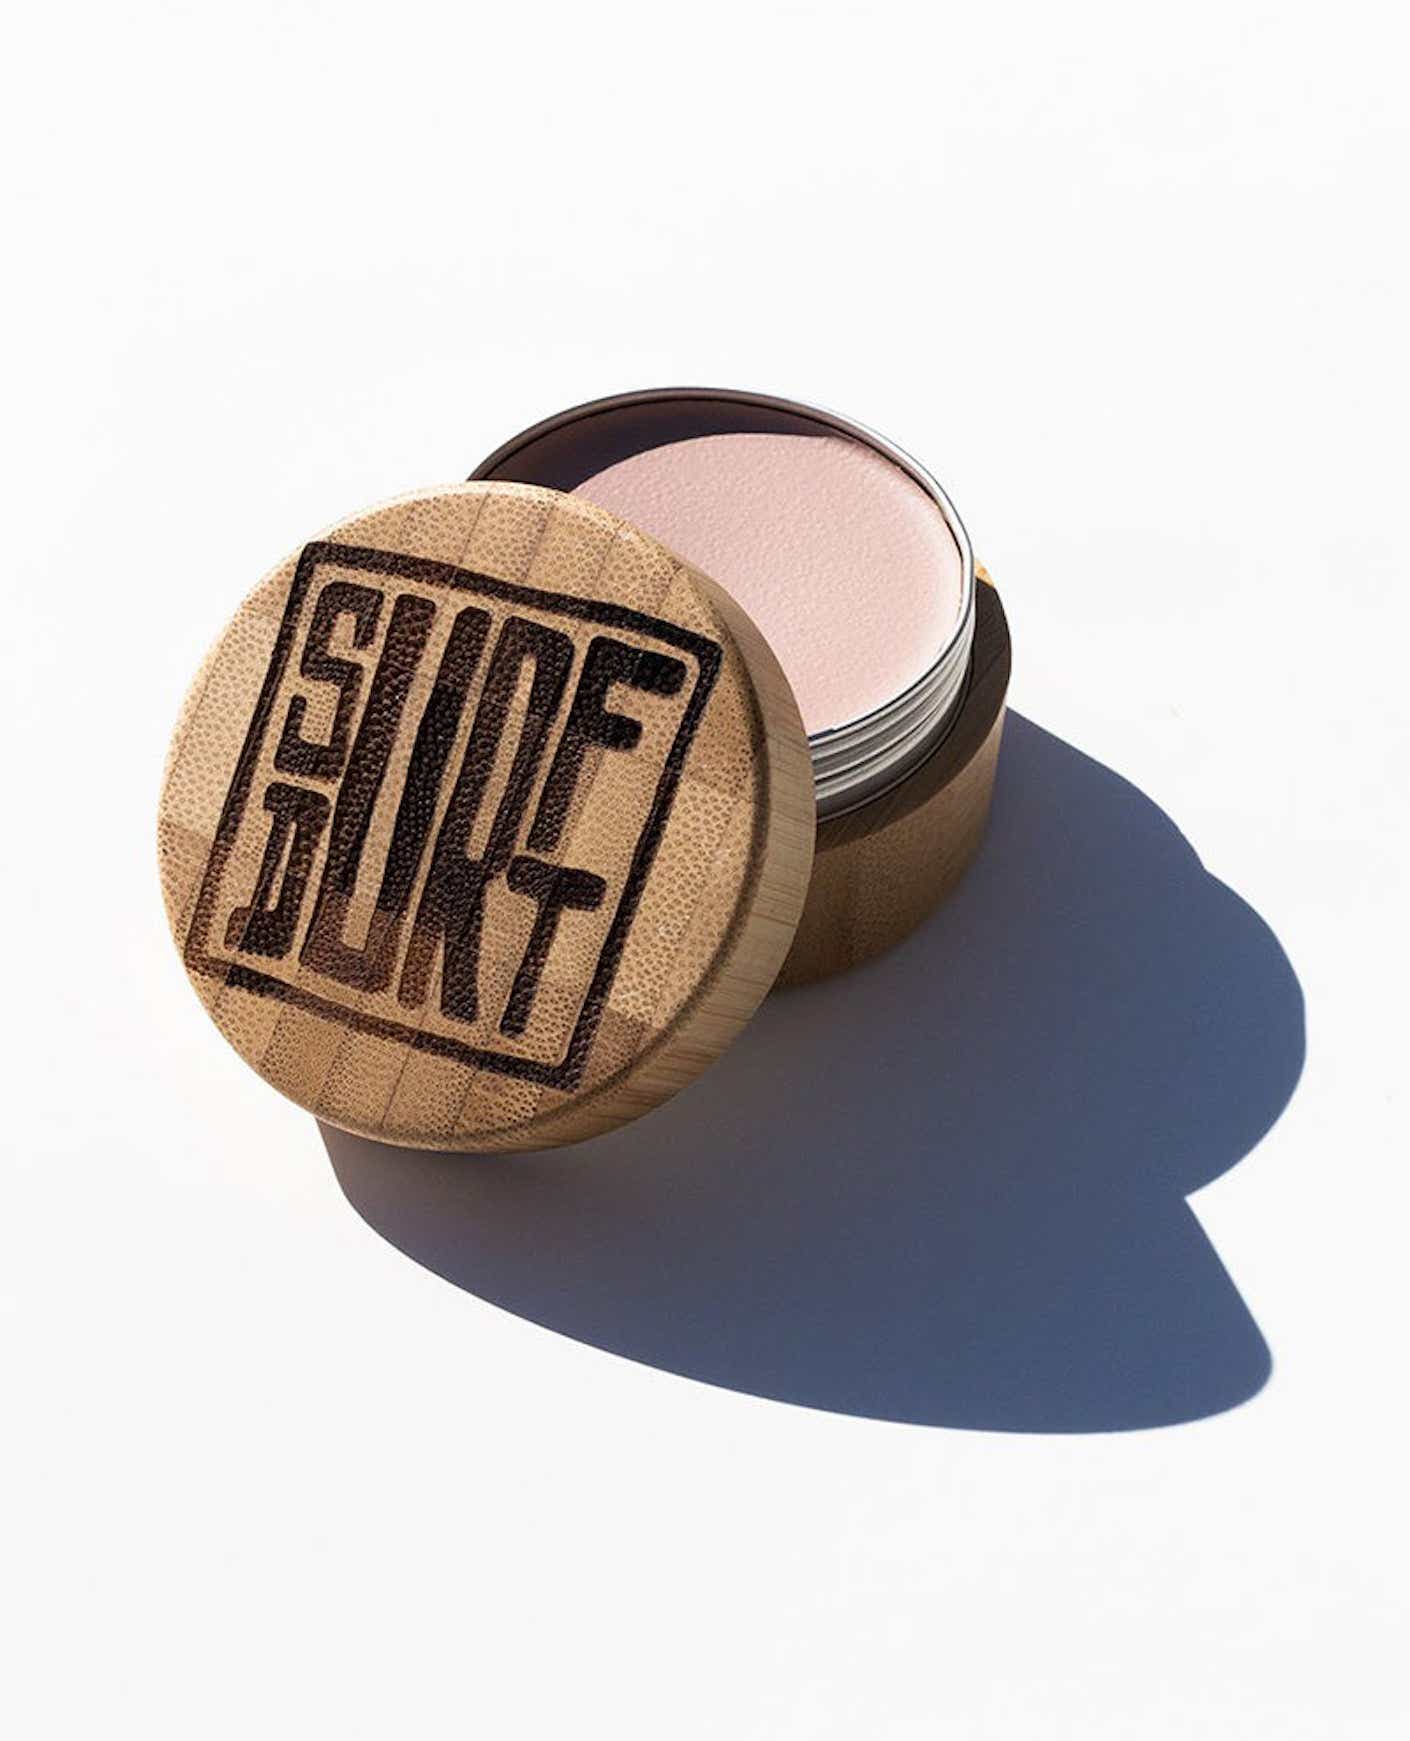 SurfDurt sunscreen zinc product image